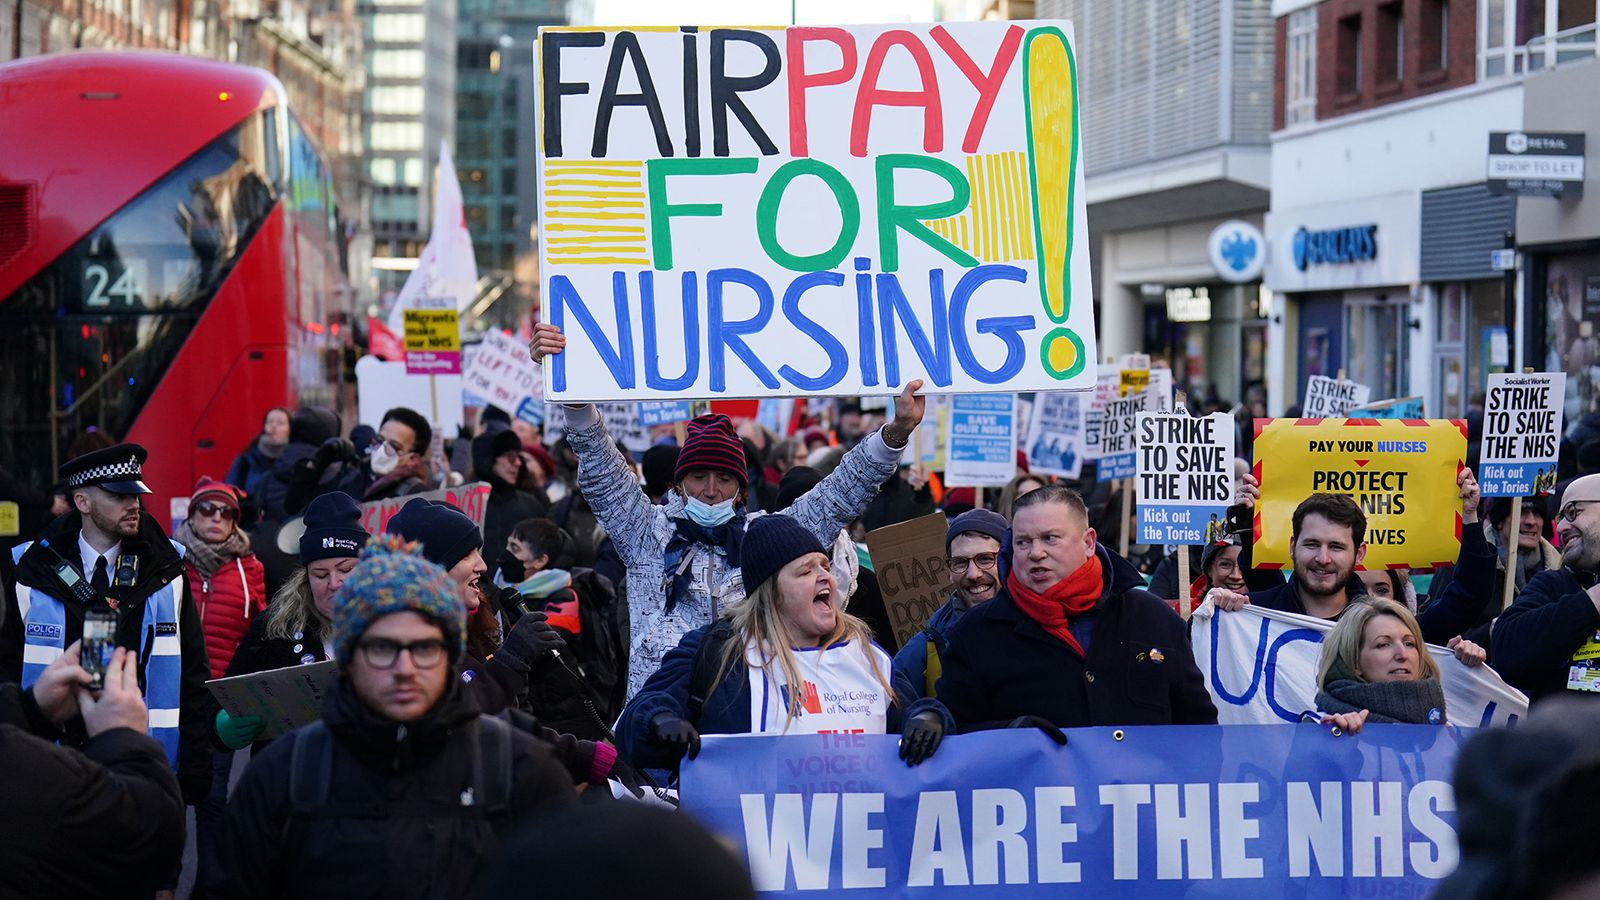 Health Secretary Steve Barclay says 10% pay rise for nurses 'not affordable' as strikes continue